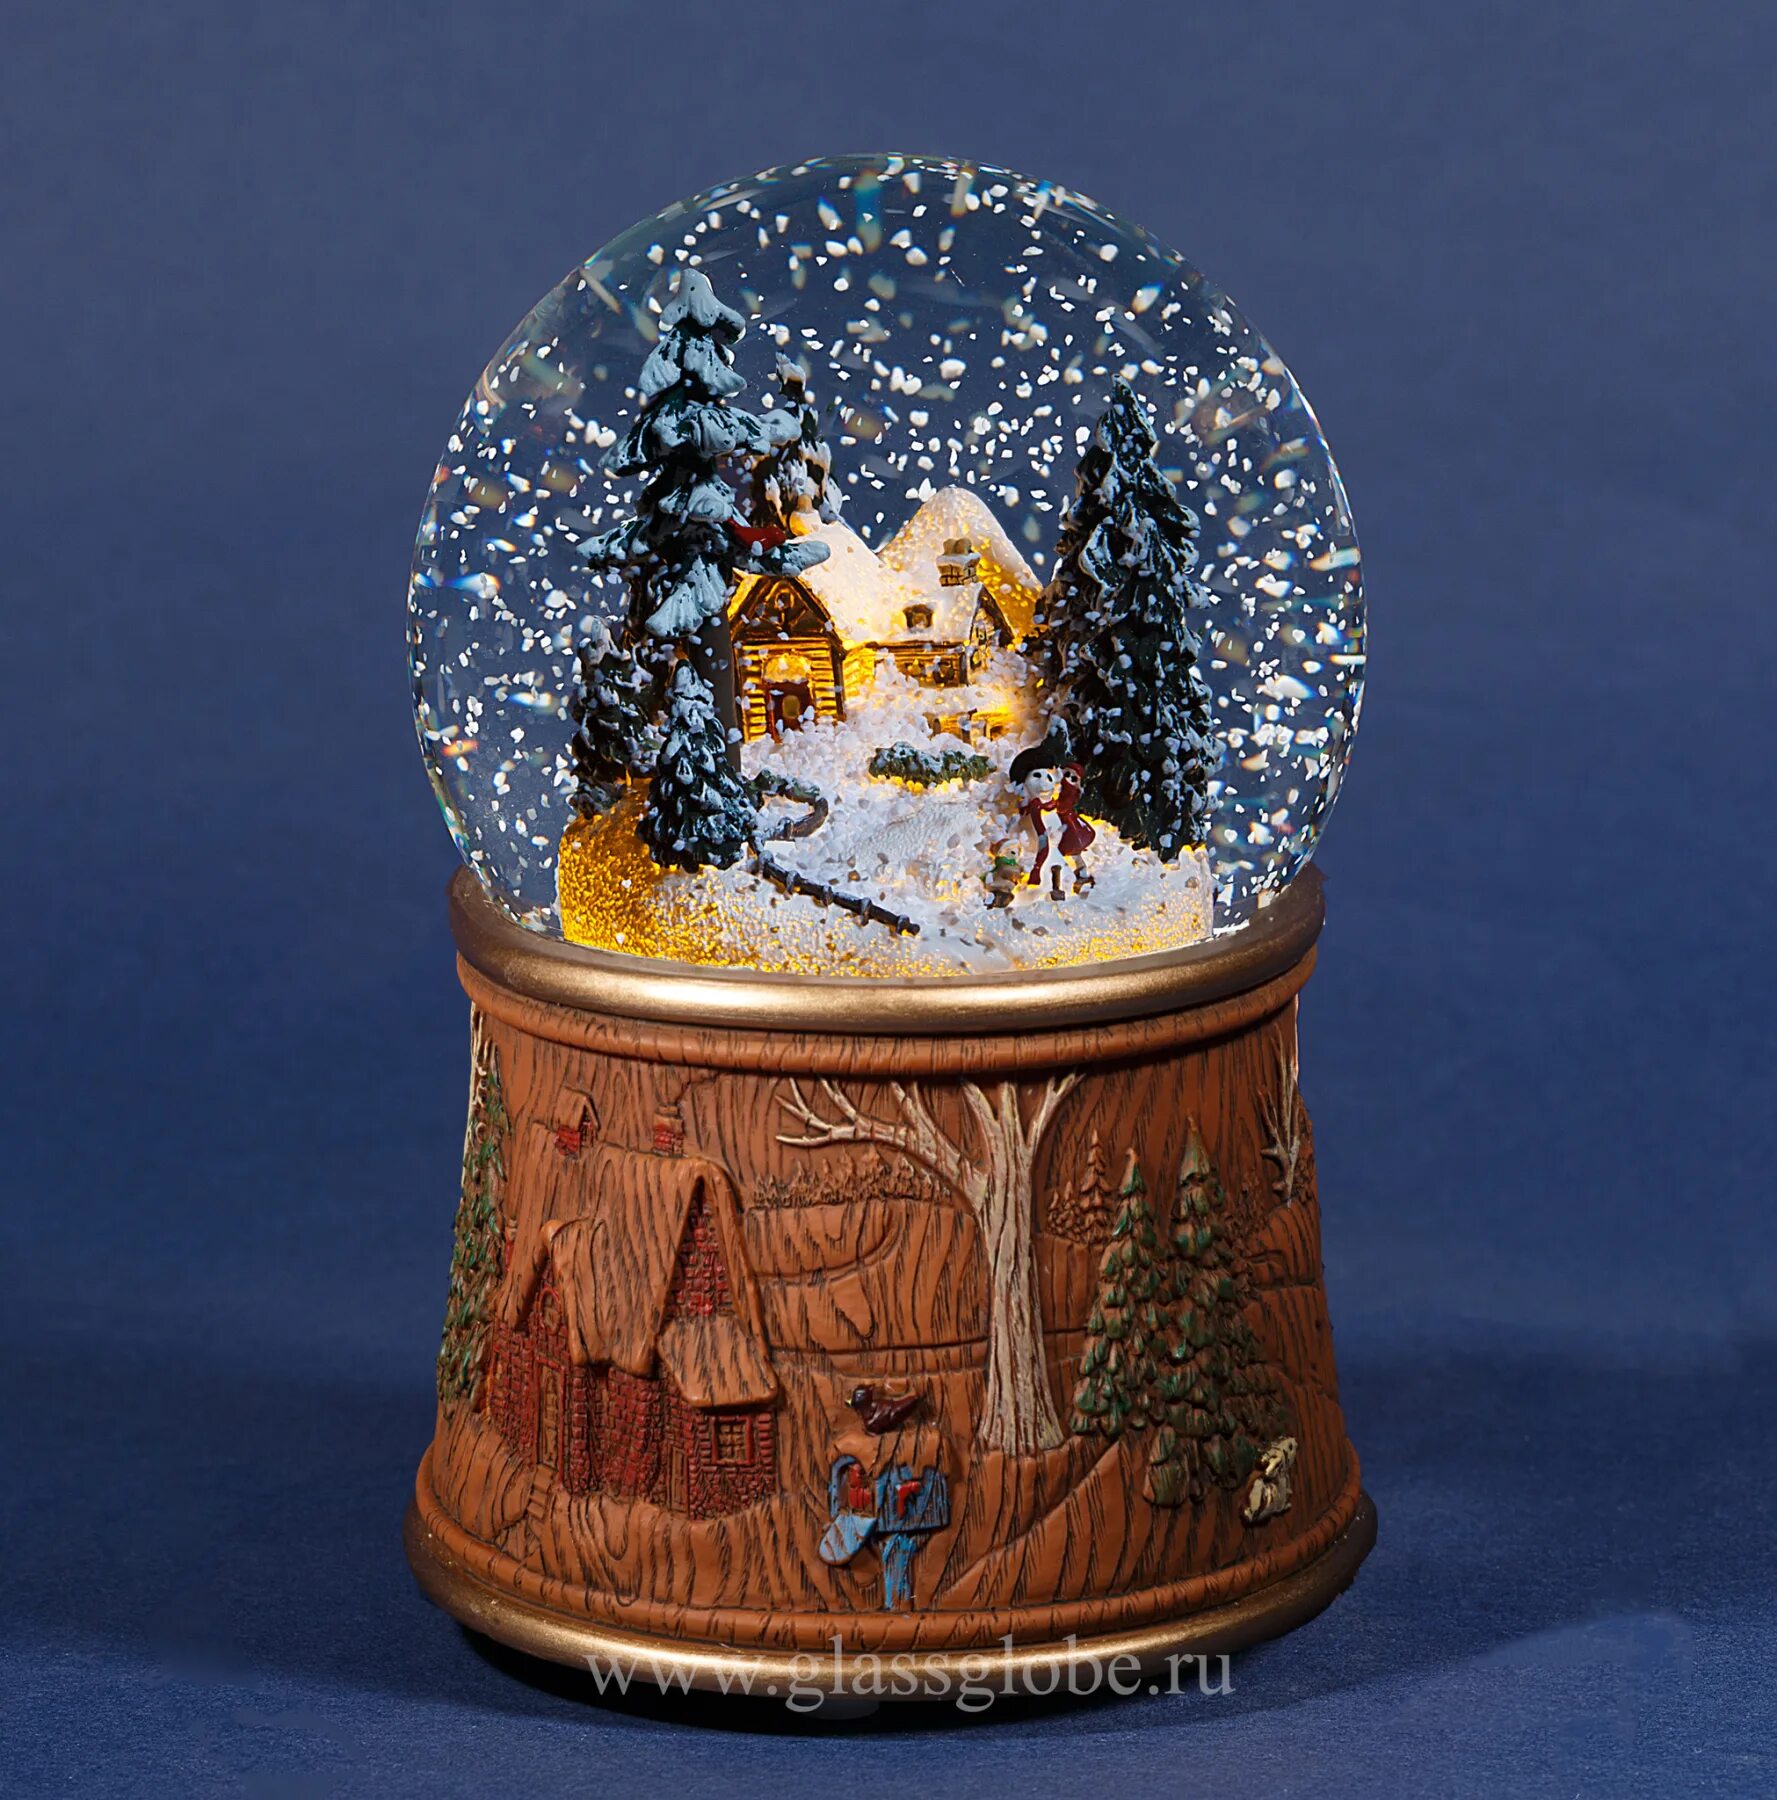 2 снежный шар. Новогодняя шкатулка «снежный шар» 40233. Снежный шар Glassglobe "домик в лесу". Магазин снежных шаров Glassglobe. Снежный шар велберис.